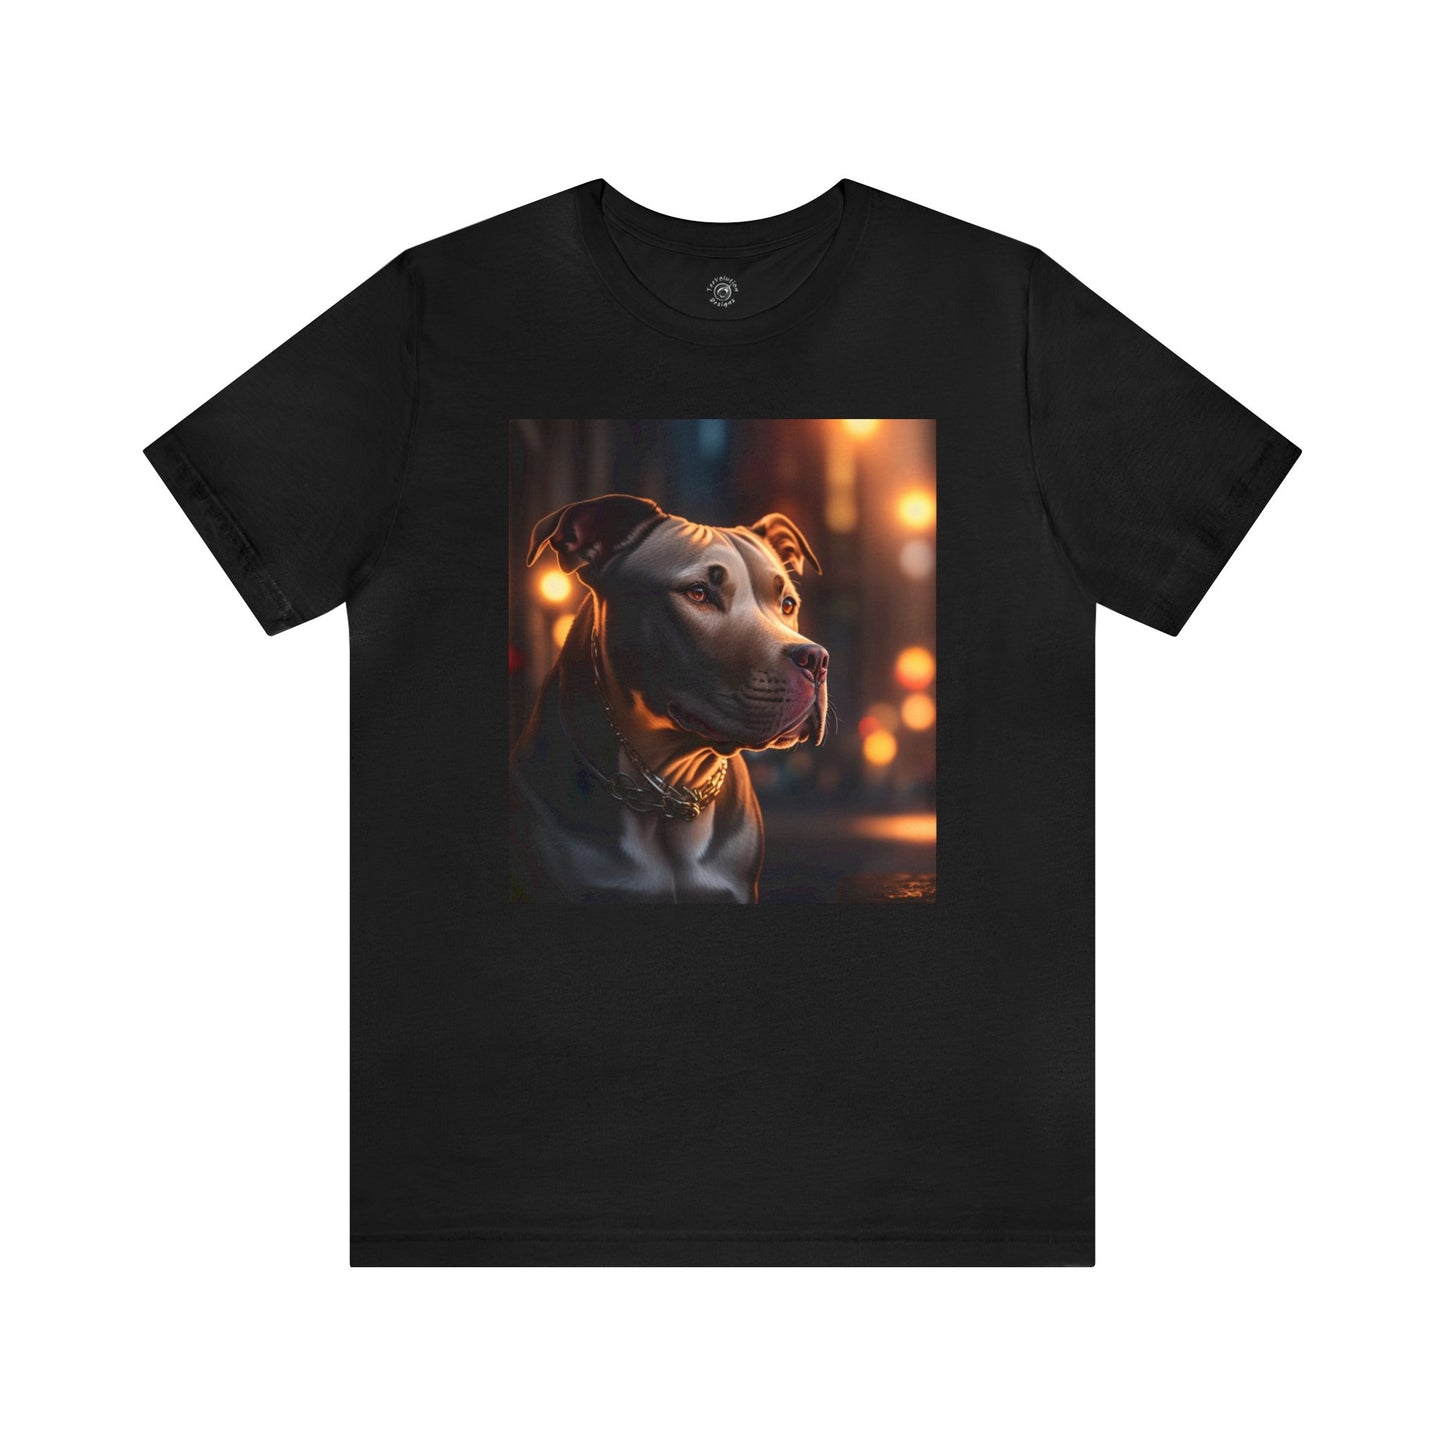 Man's Best Friend | Pitbull | HD | Dog Lover Gift | Pittie | Unisex | Men's | Women's | Tee | T-Shirt